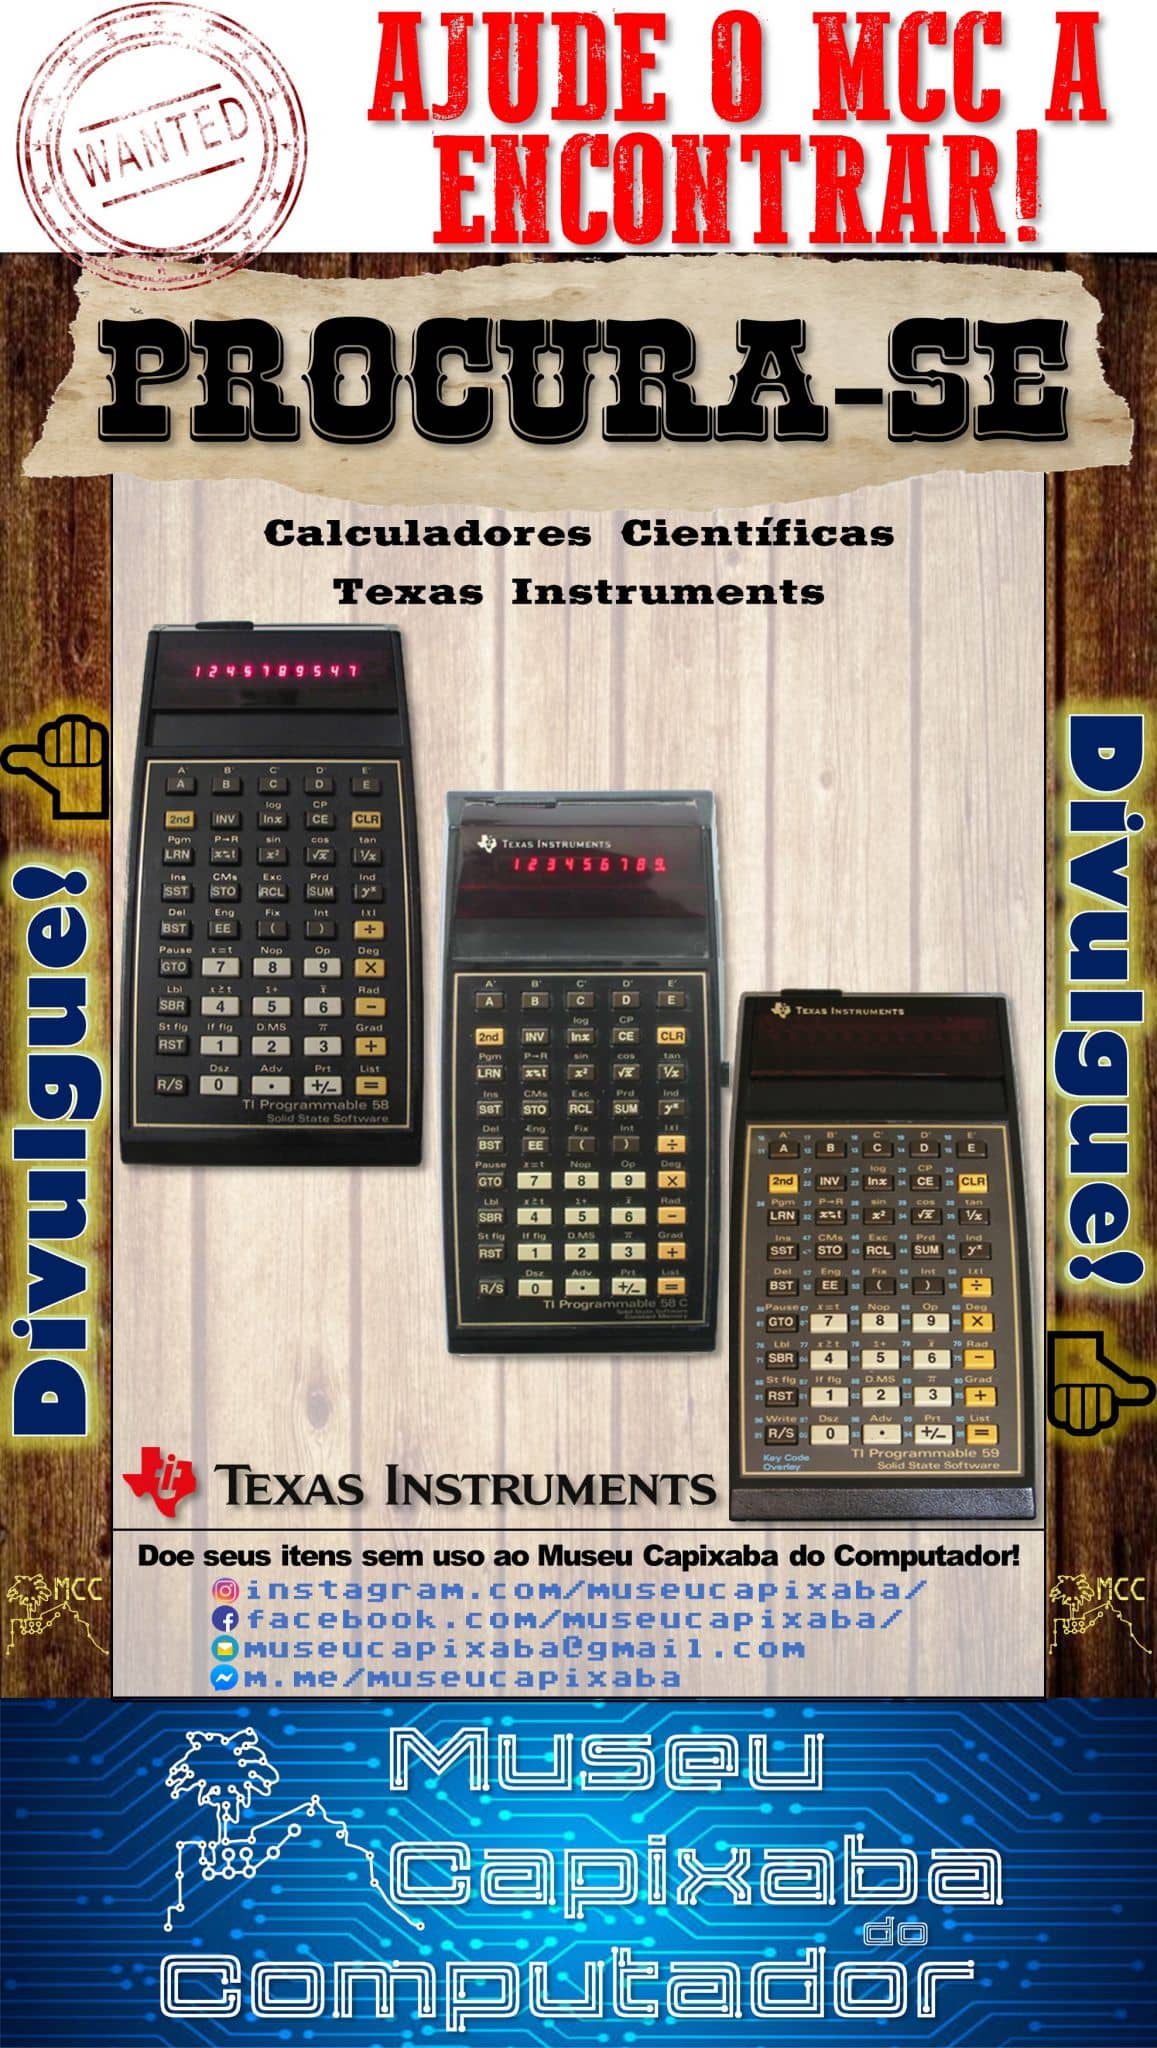 Texas Instruments calculadoras